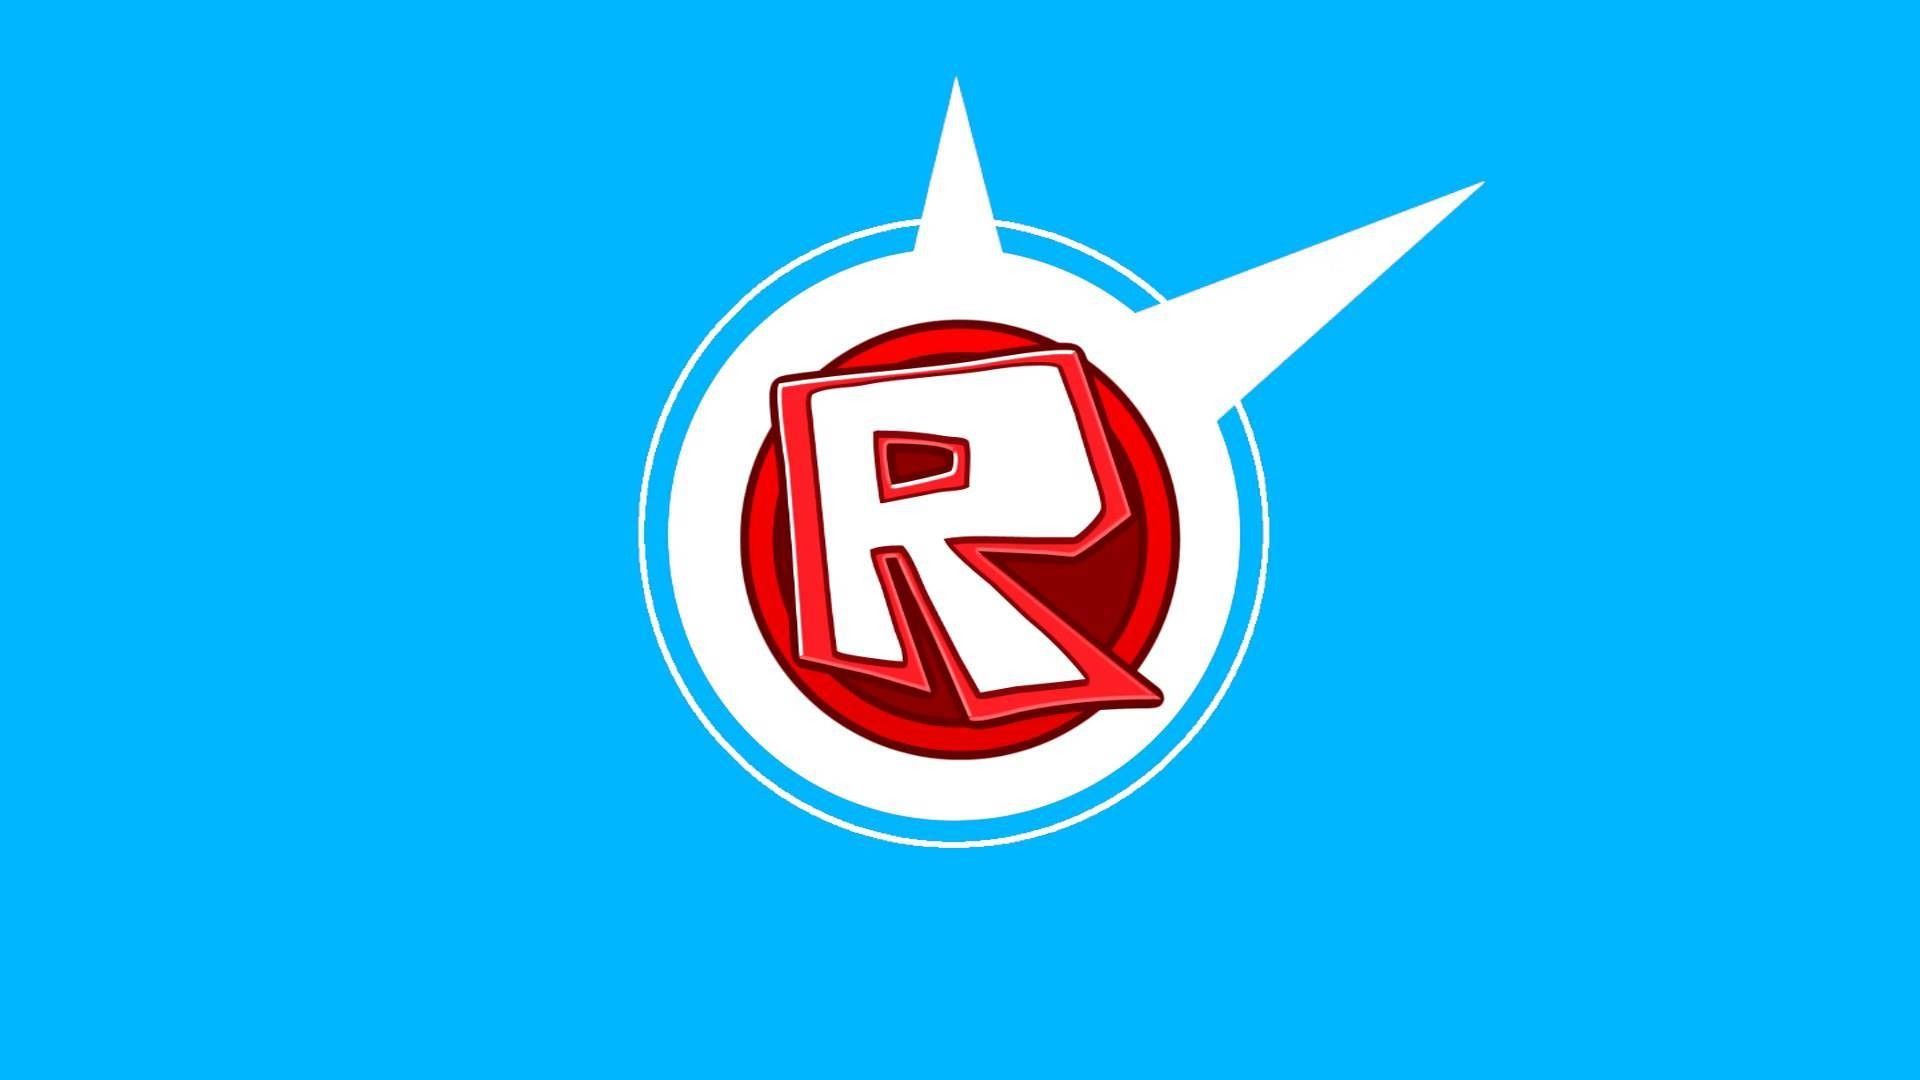 Roblox Logo Wallpaper Free Roblox Logo Background